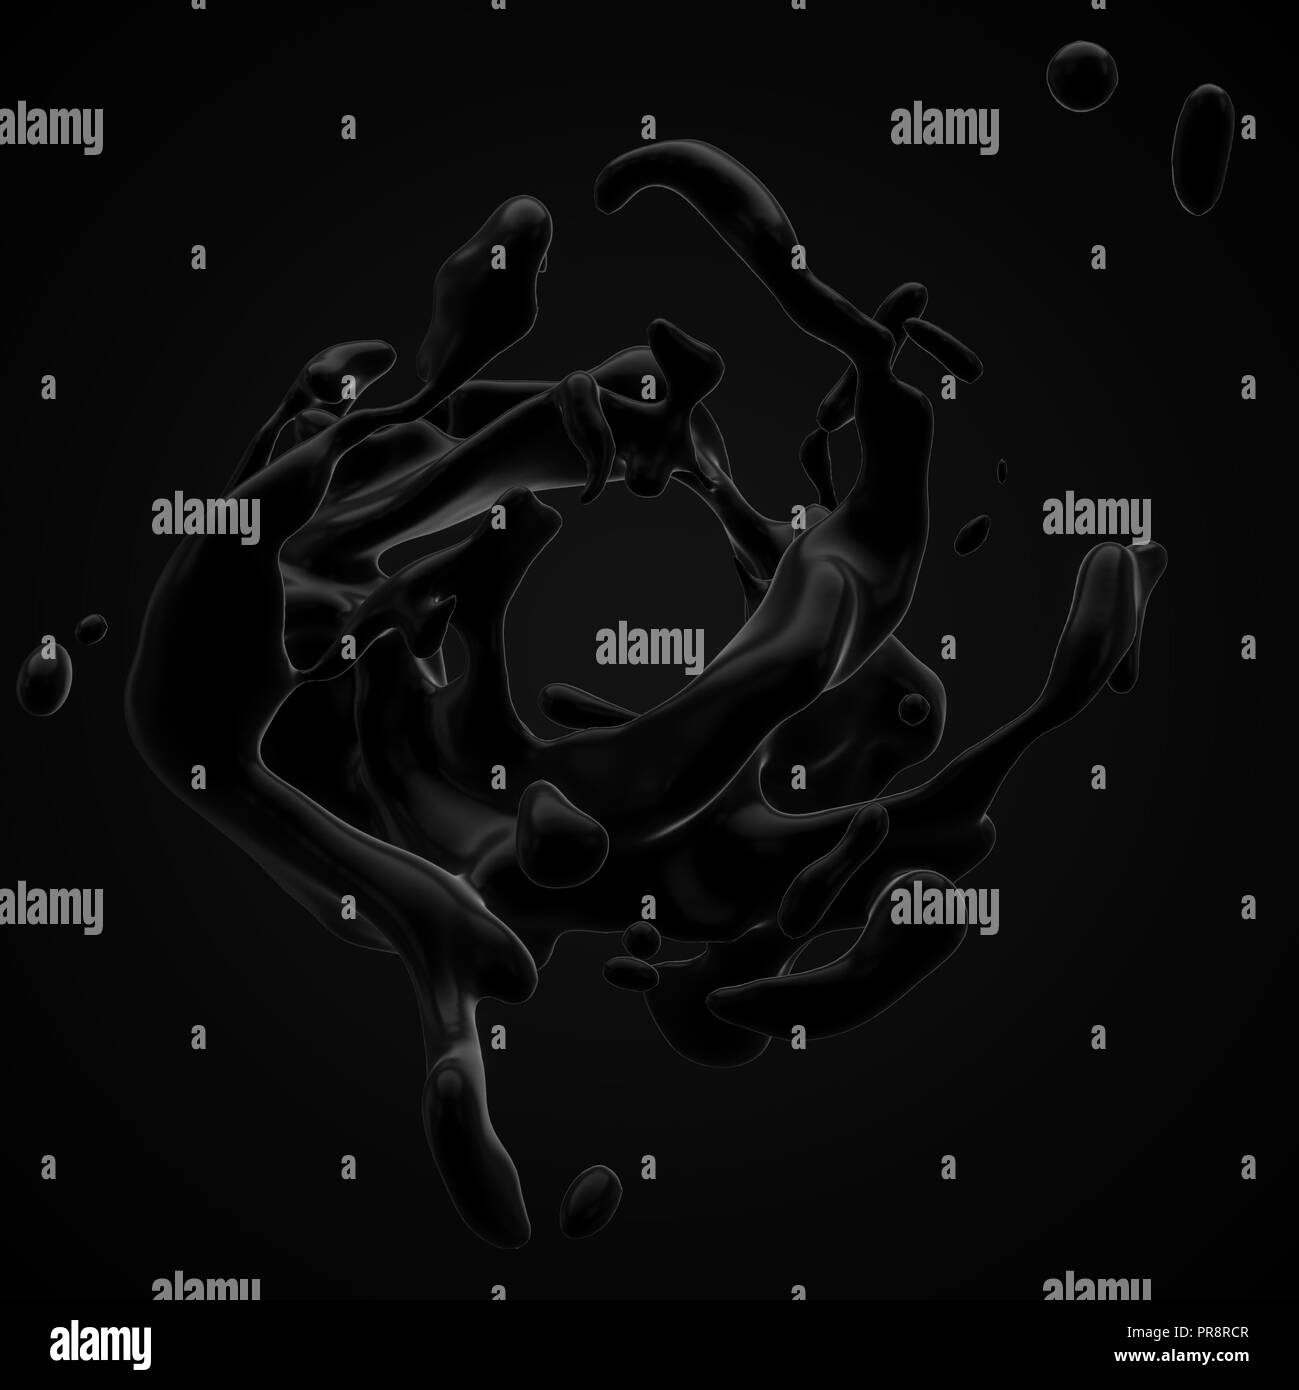 strange blackfluid movements without gravitation. 3d illustration Stock Photo